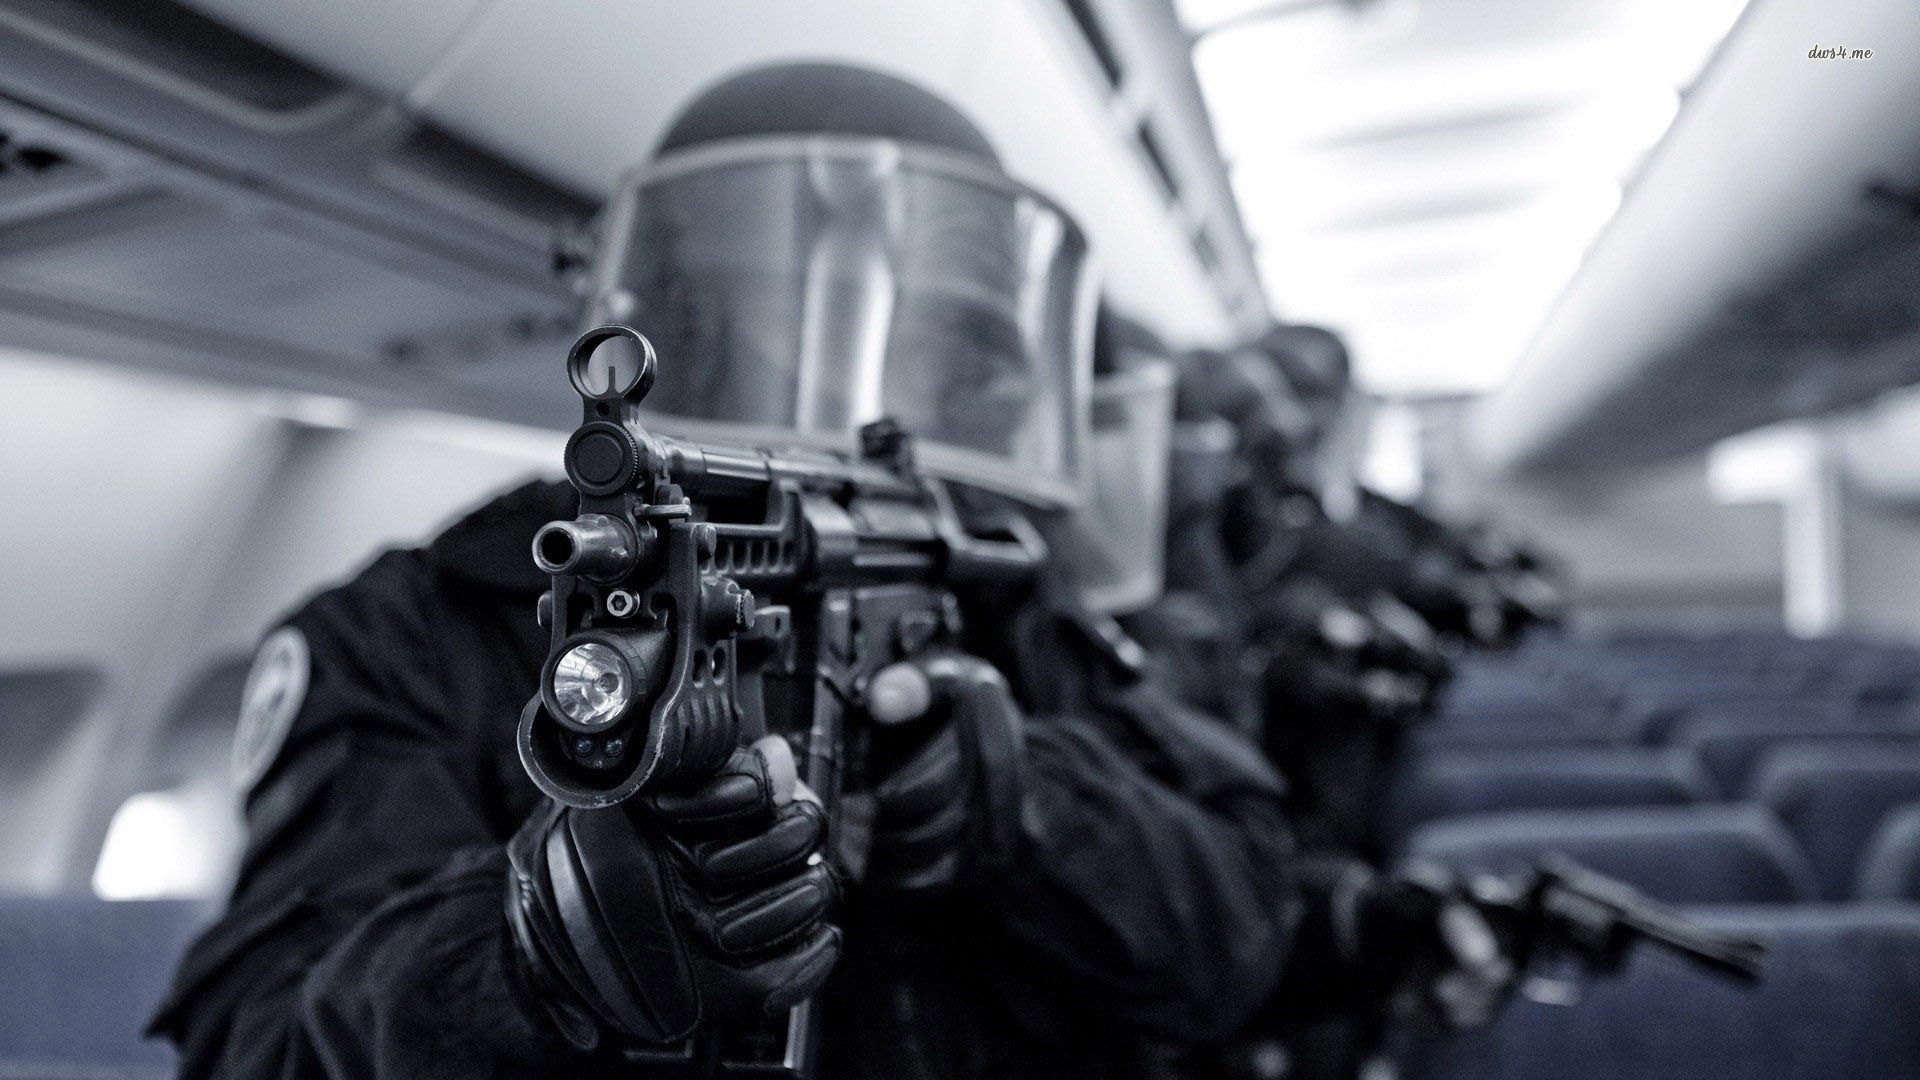 SWAT team wallpaper - Photography wallpapers -